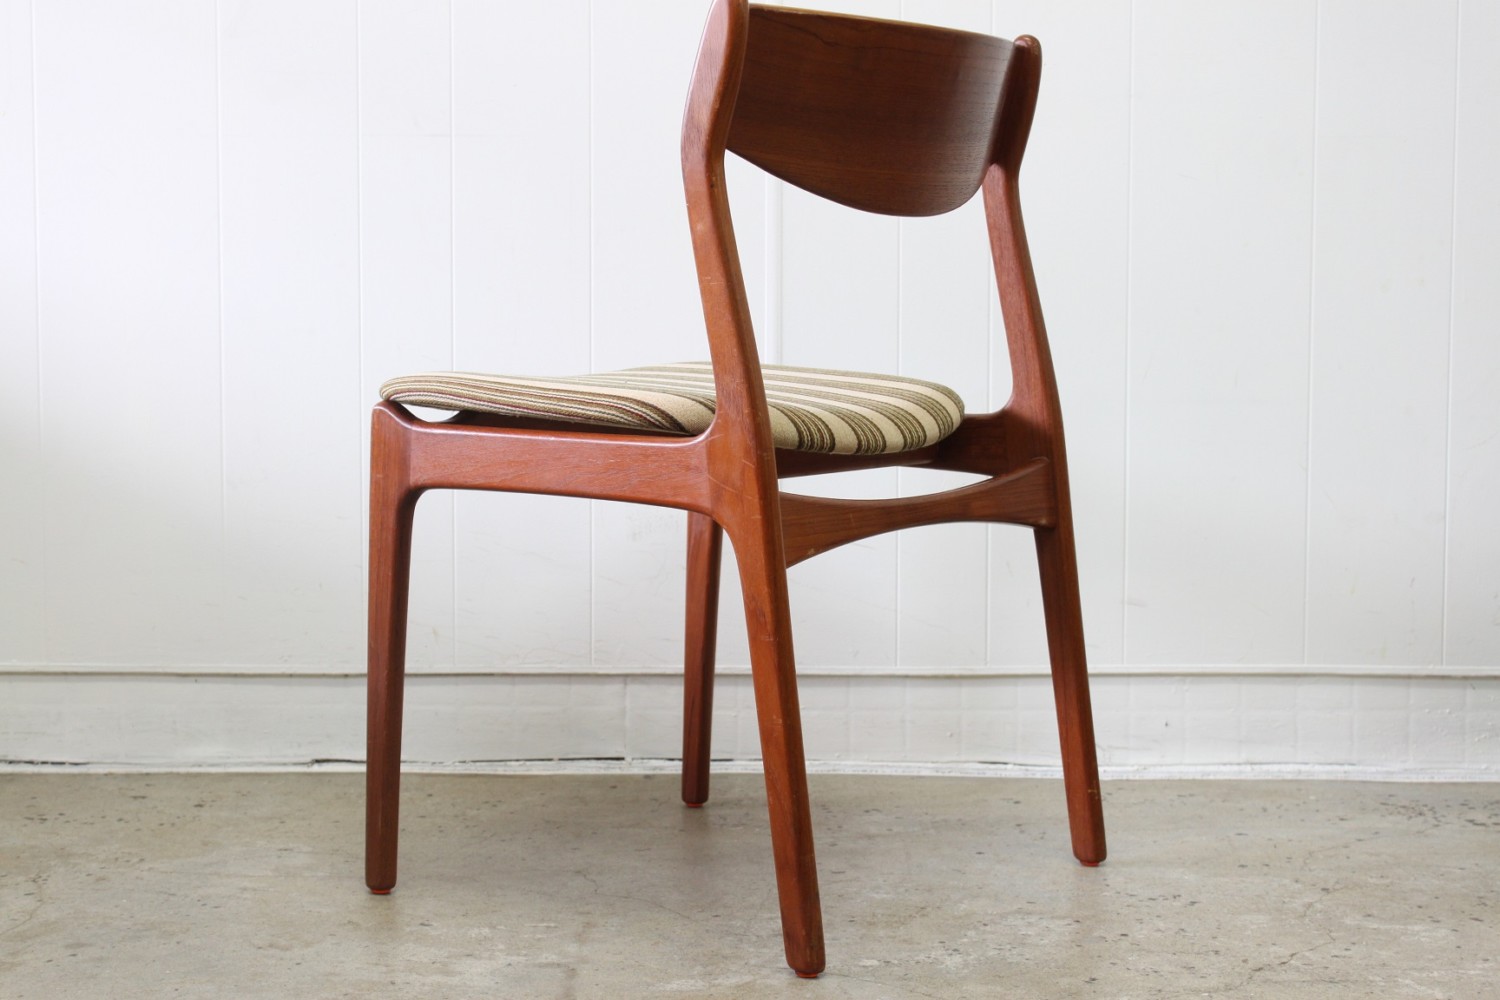 Danish Teak Chairs By P.E. JØrgensen